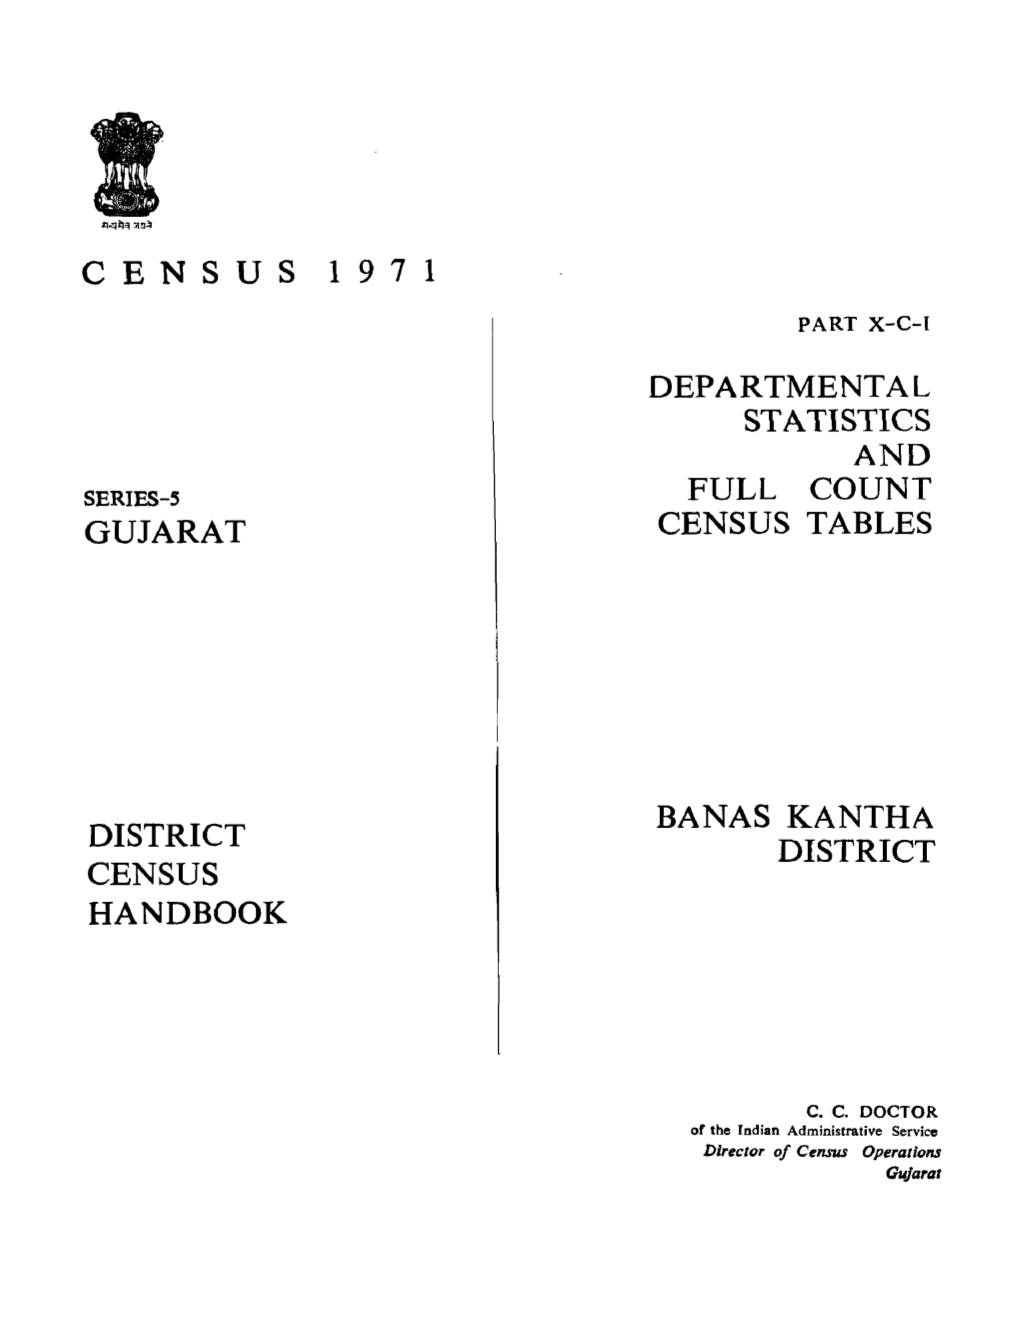 District Census Handbook, Banas Kantha, Part X-C-I, Series-5